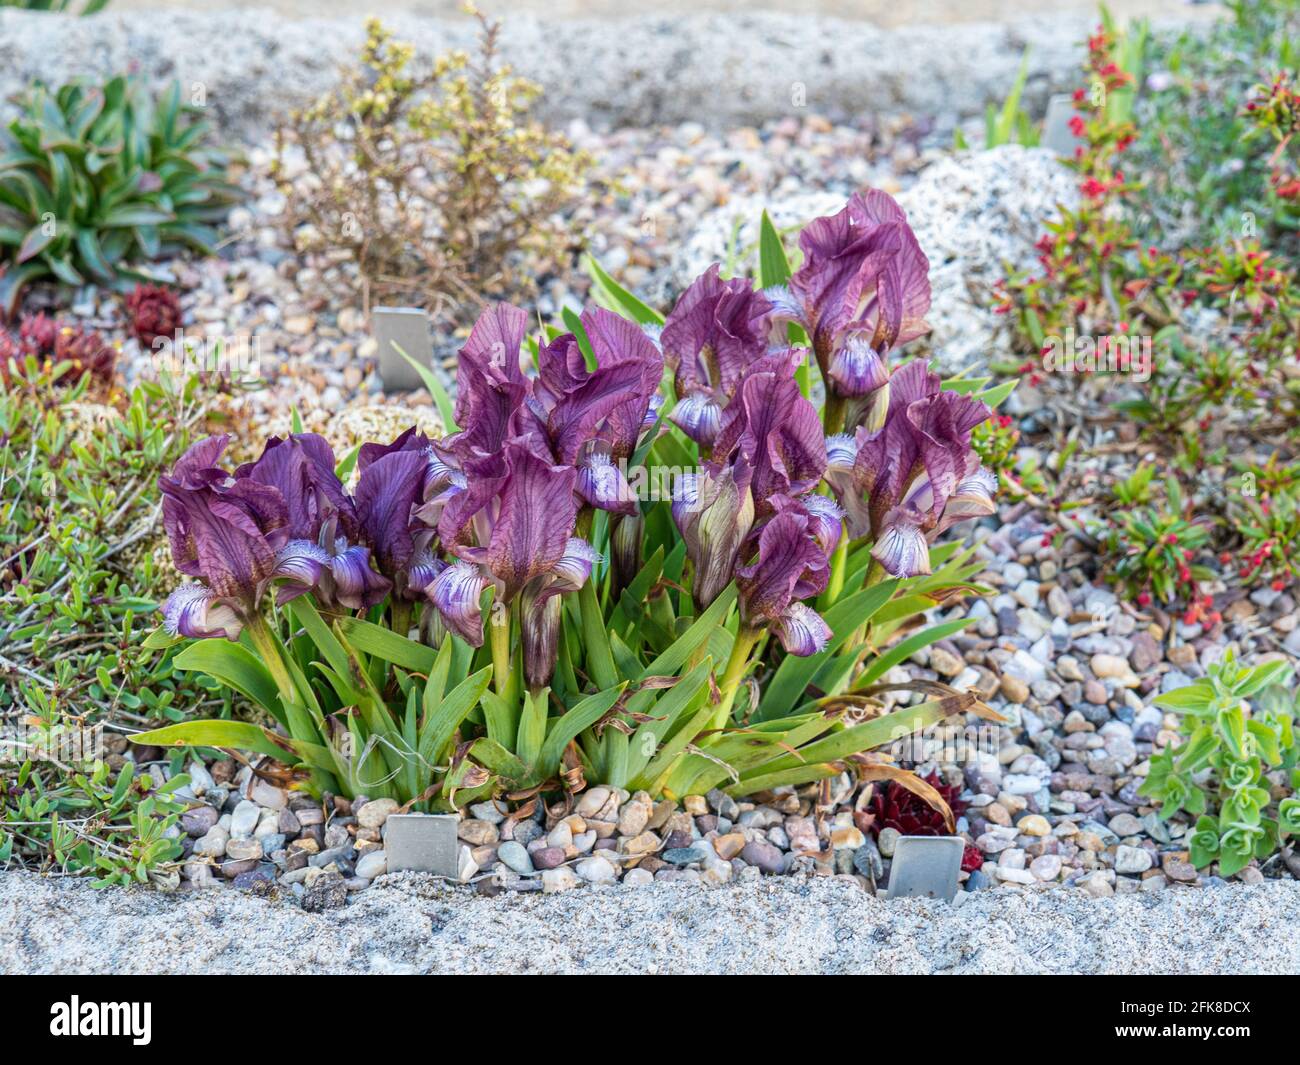 The dwarf purple flowered Iris suaveolens flowering on the edge of sink garden. Stock Photo